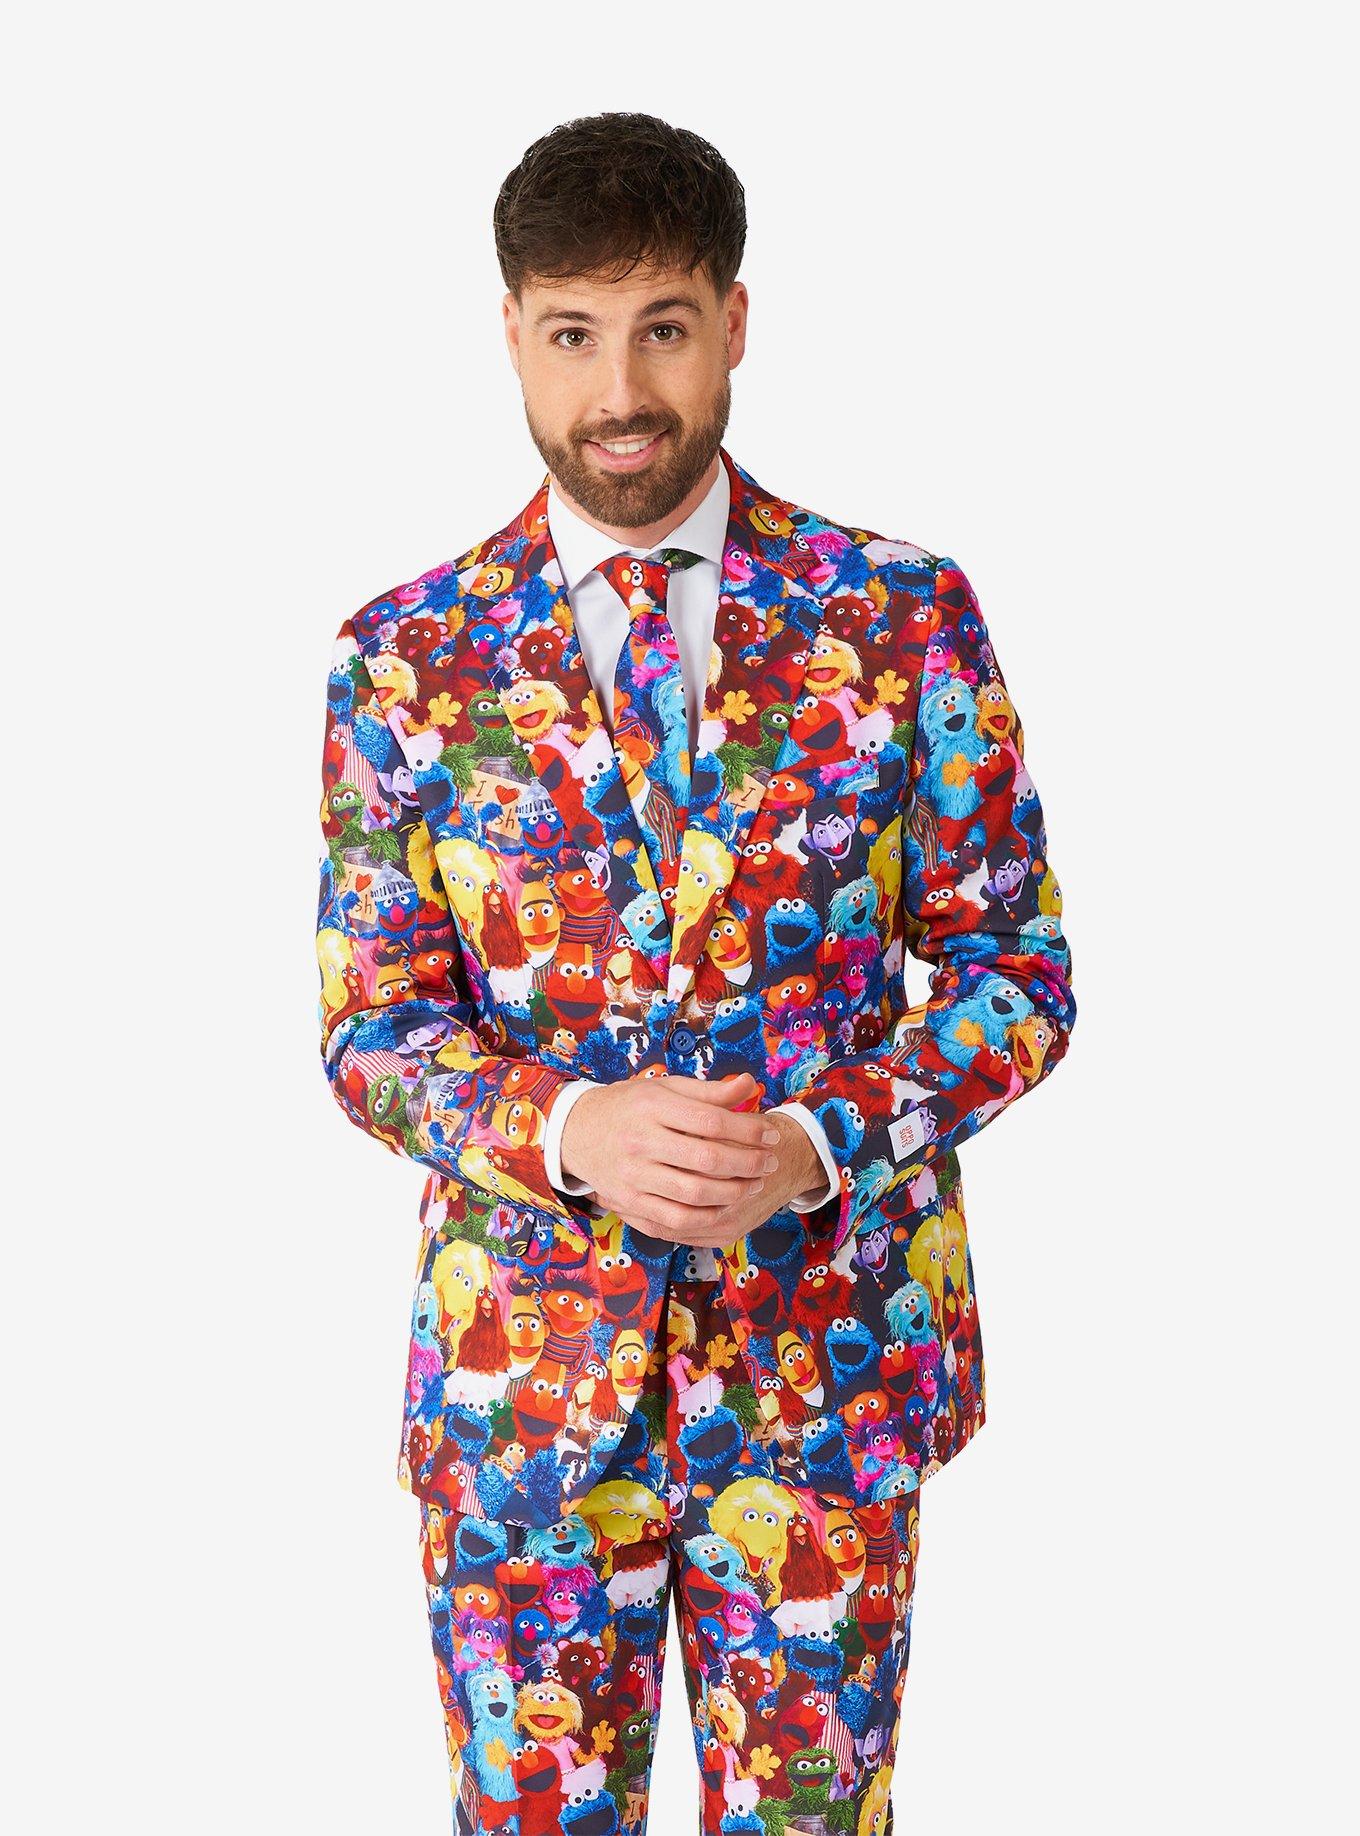 Sesame Street Suit